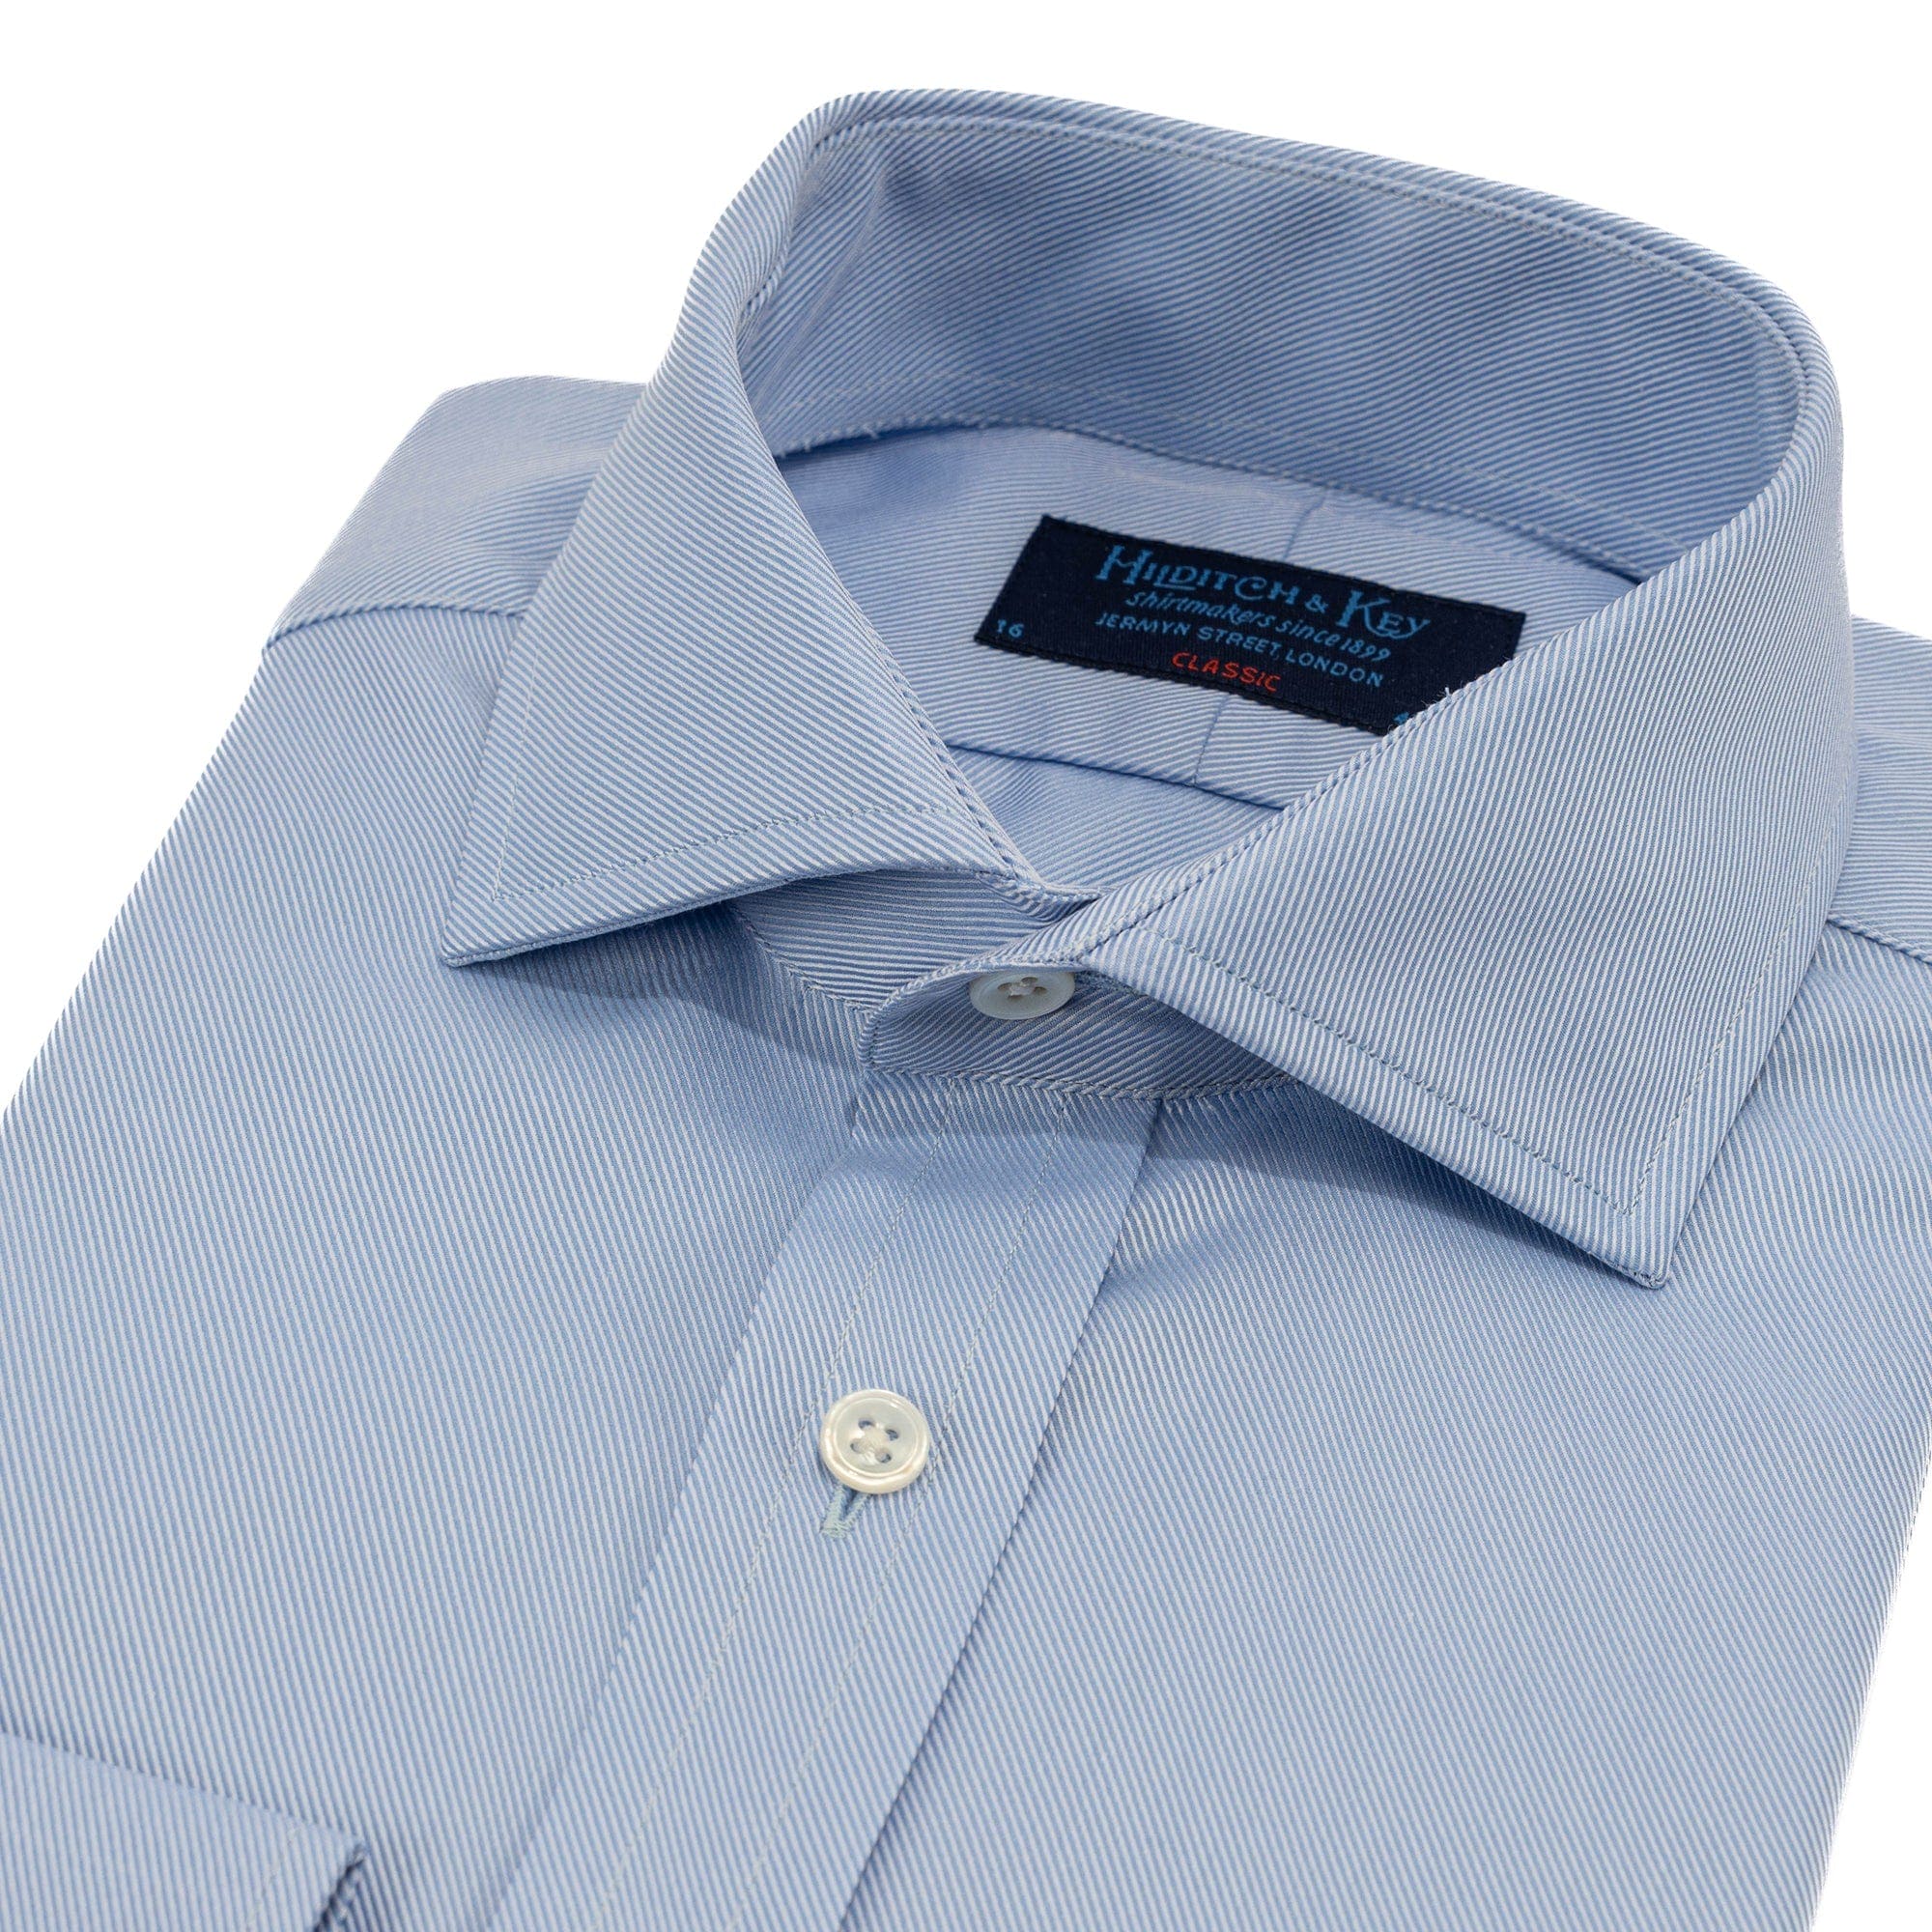 Classic Fit, Cutaway Collar, Two Button Cuff Shirt in Light Blue Twill